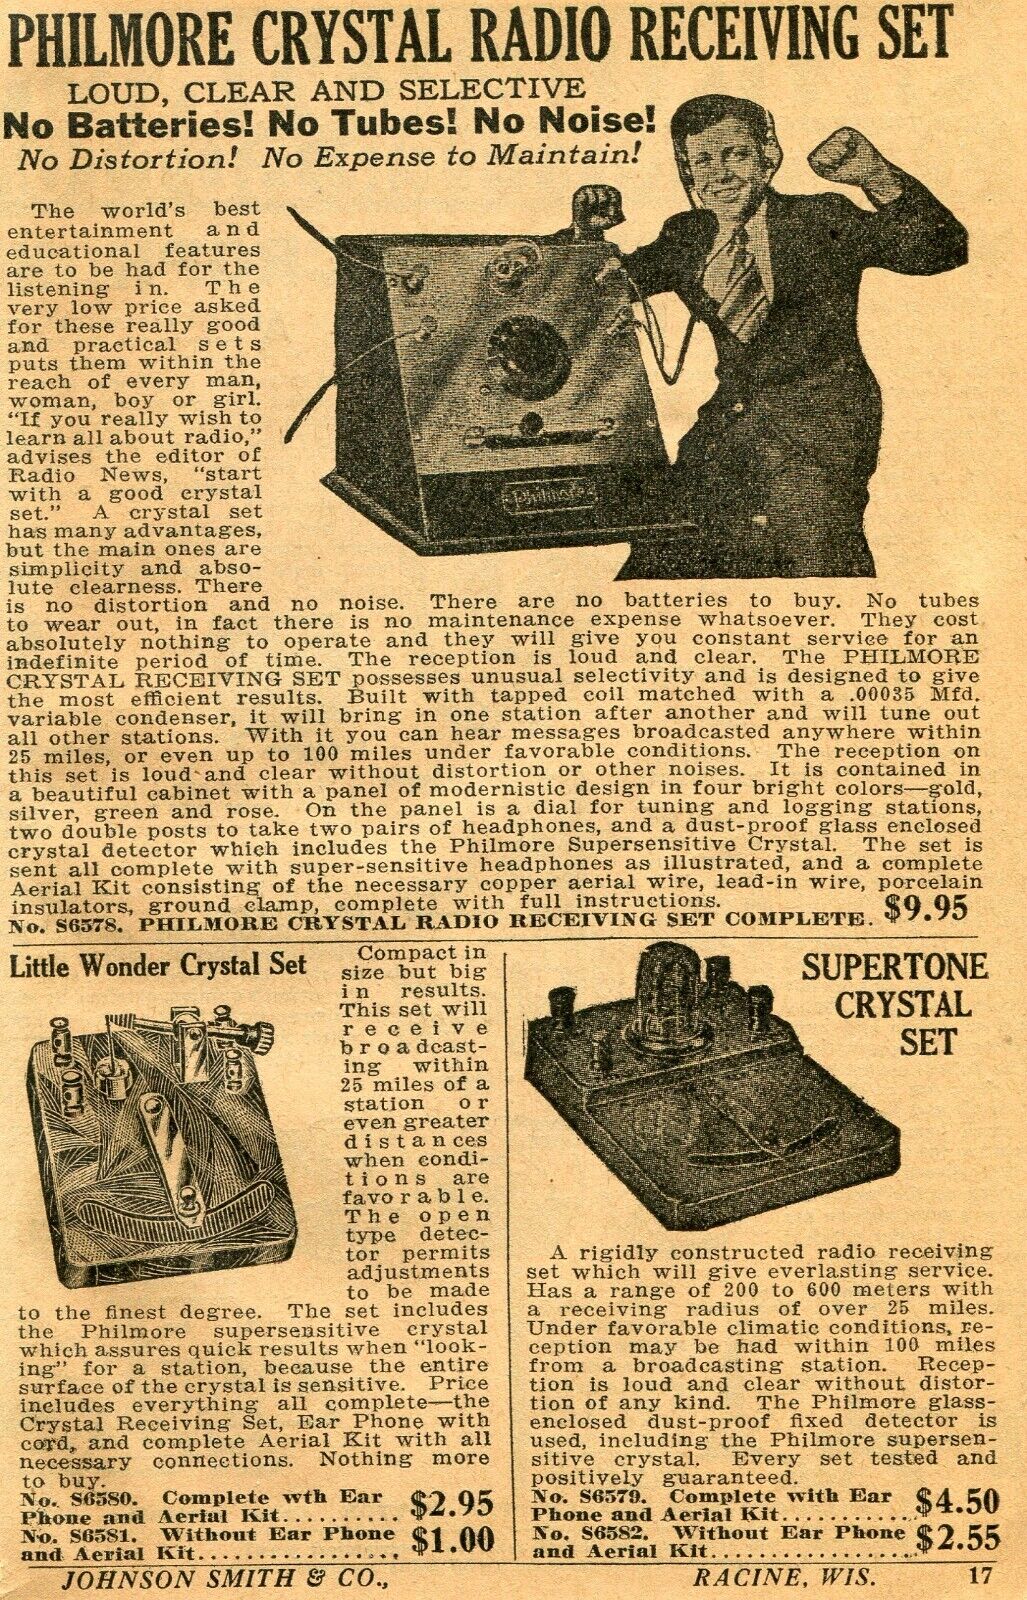 1933 small Print Ad of Philmore Crystal Radio Receiving Set